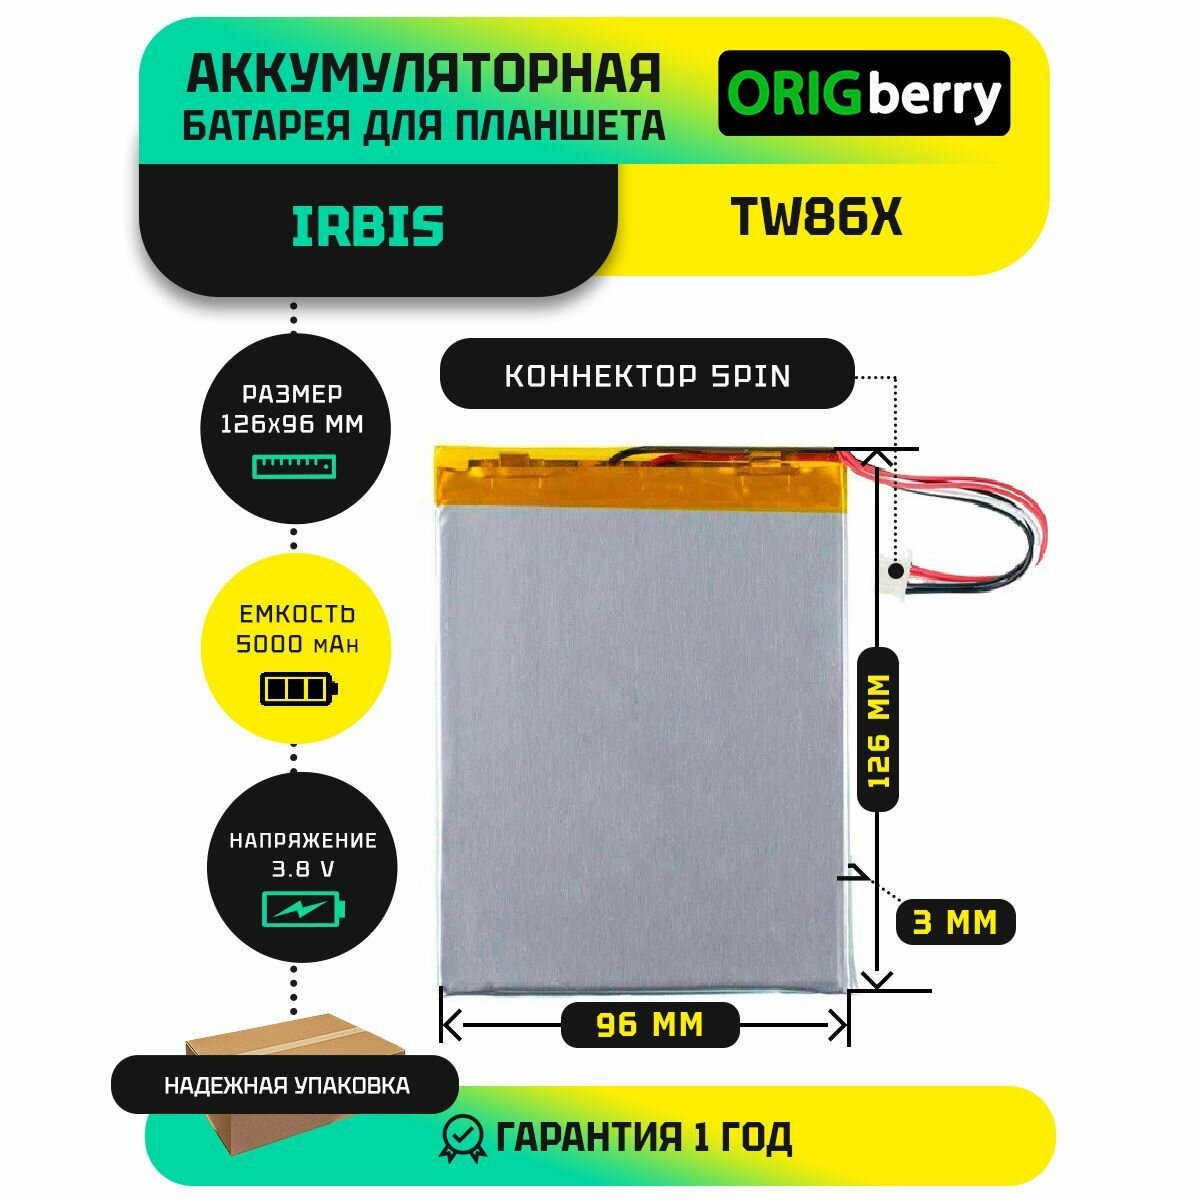 Аккумулятор для планшета Irbis TW86x 3,8 V / 5000 mAh / 126мм x 96мм x 3мм / коннектор 5 PIN